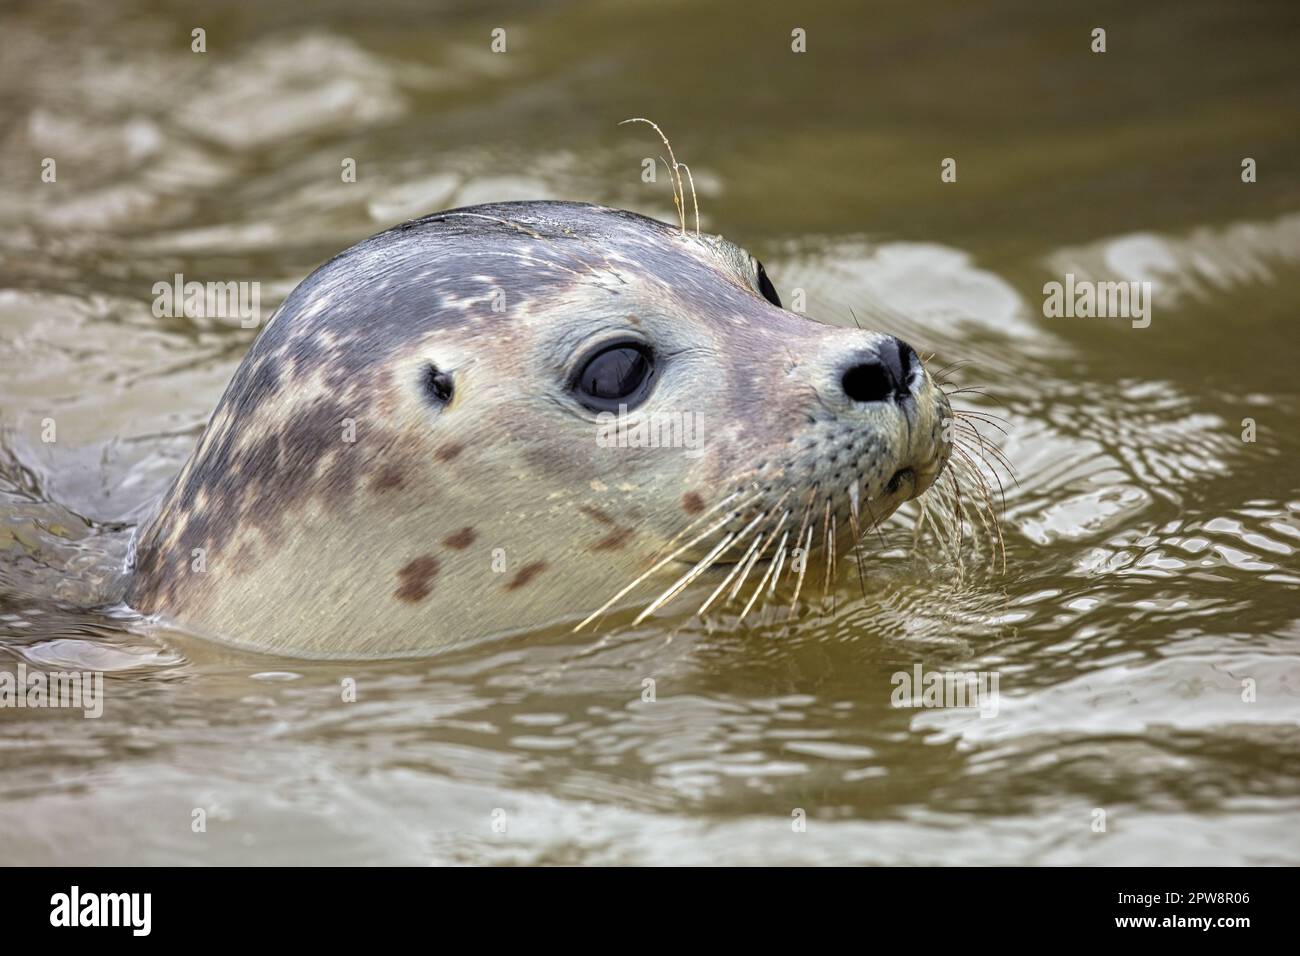 The Netherlands, Pieterburen, Wadden Sea, Unesco World Heritage Site. Harbor (or harbour) seals (Phoca vitulina), also known as the common seal. Stock Photo